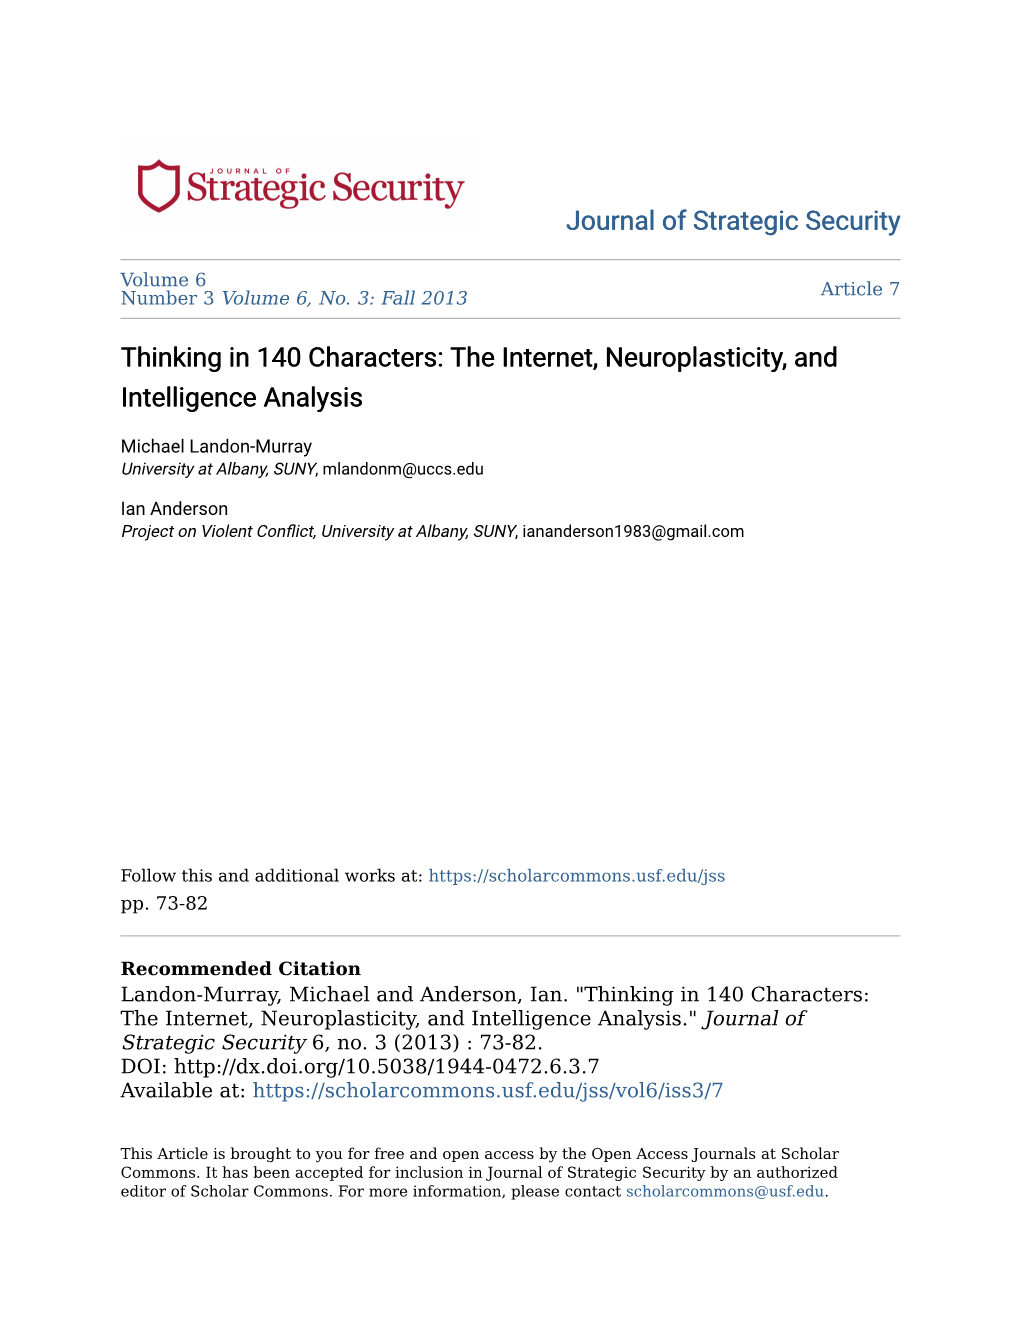 The Internet, Neuroplasticity, and Intelligence Analysis